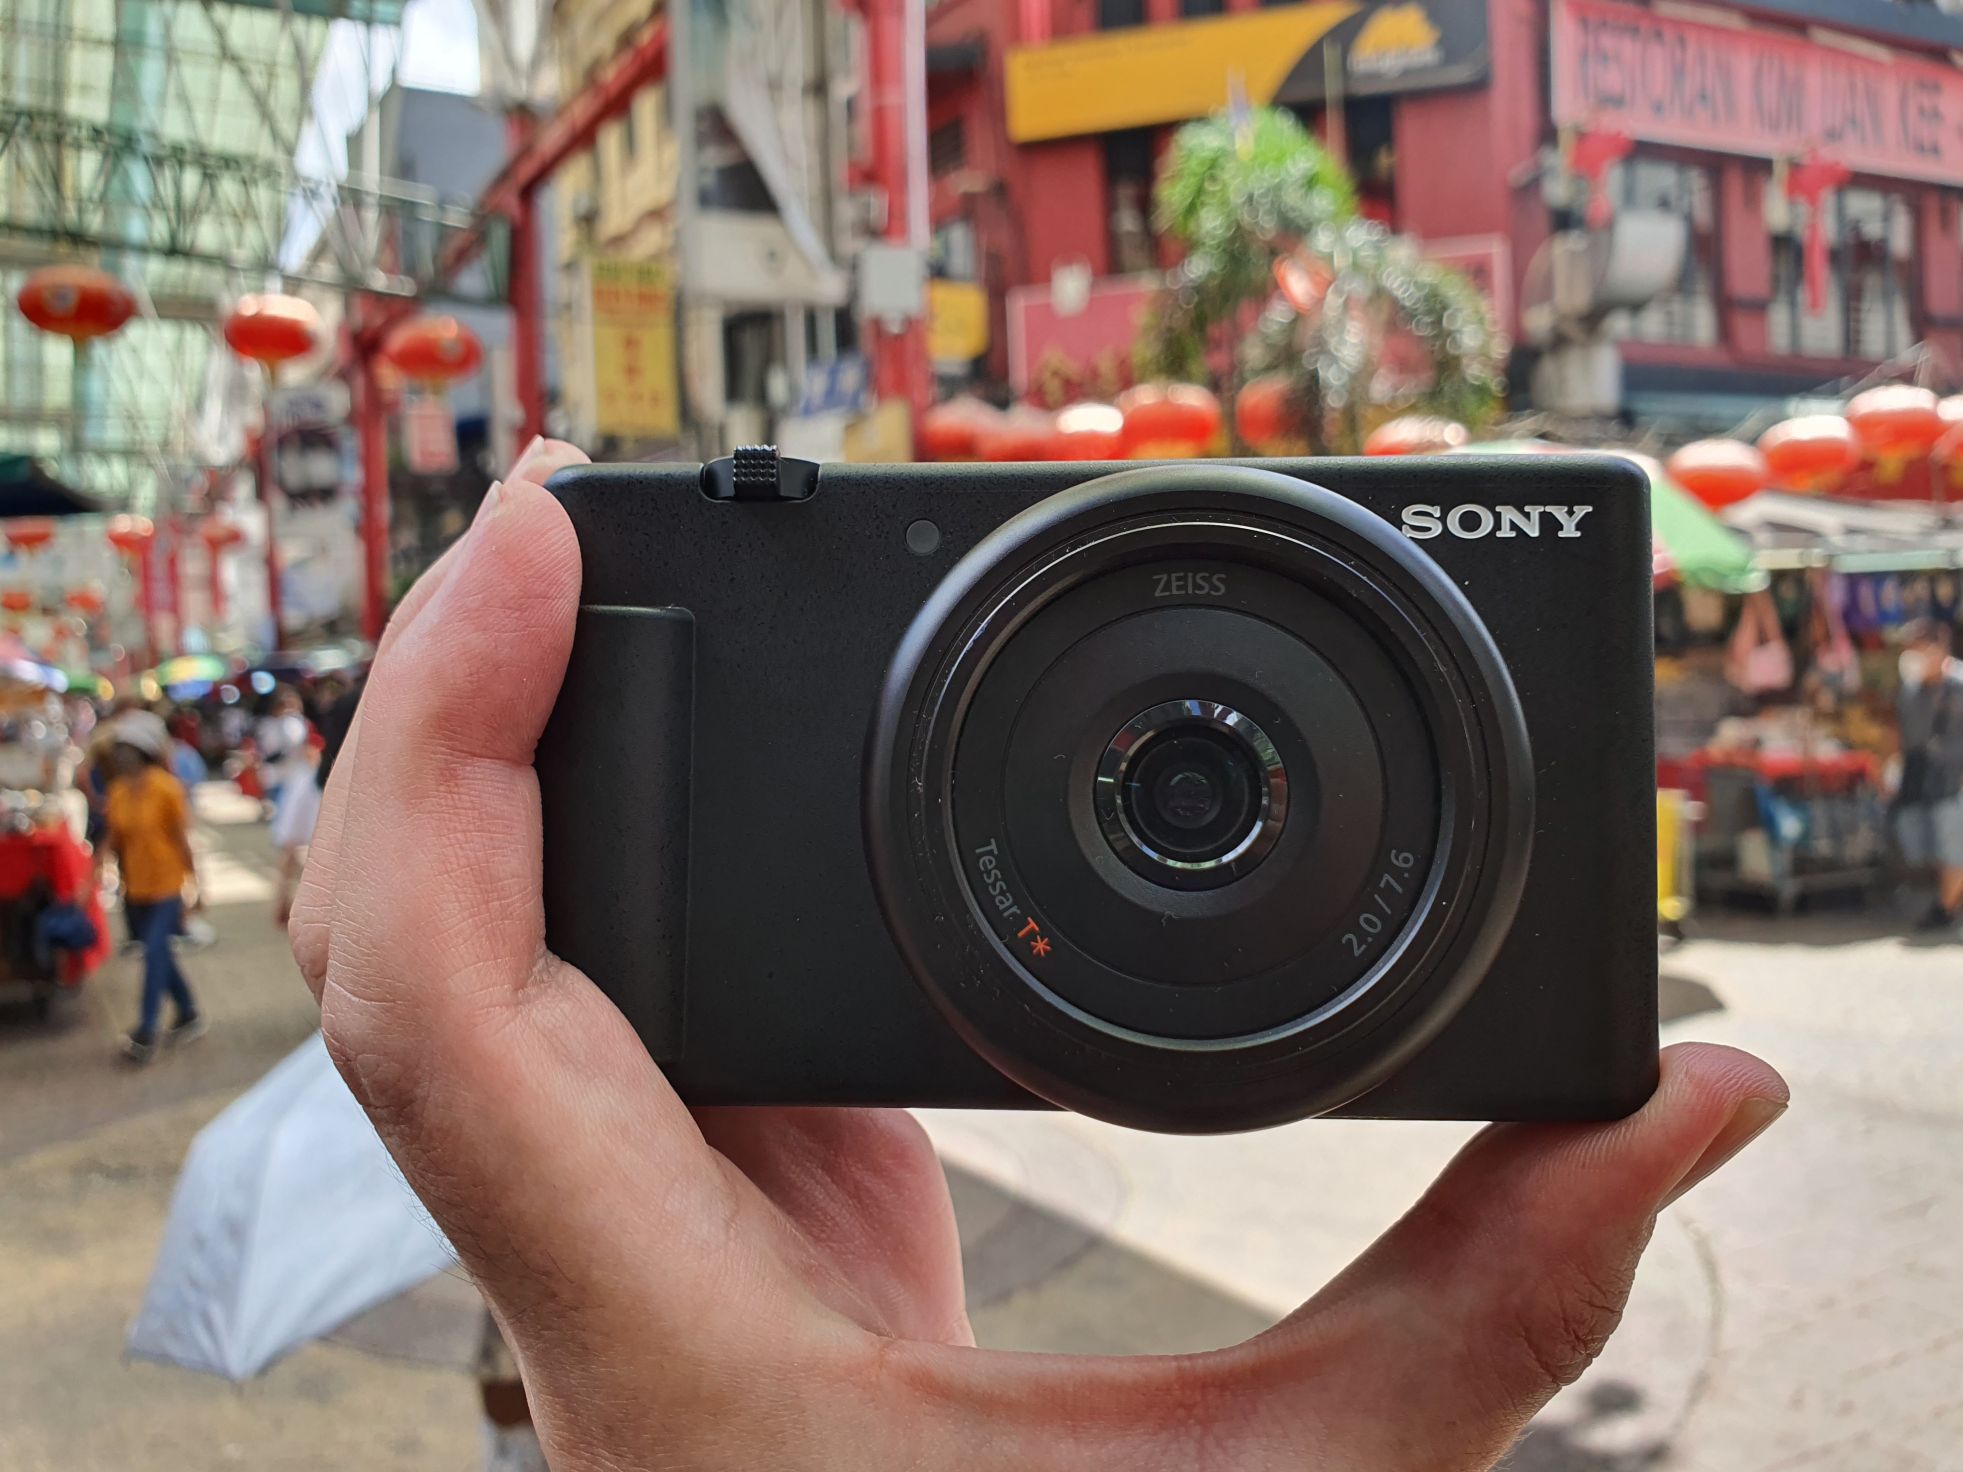 sony-zv-1f-review-pocket-sized-vlogger-camera-delight-hitech-century